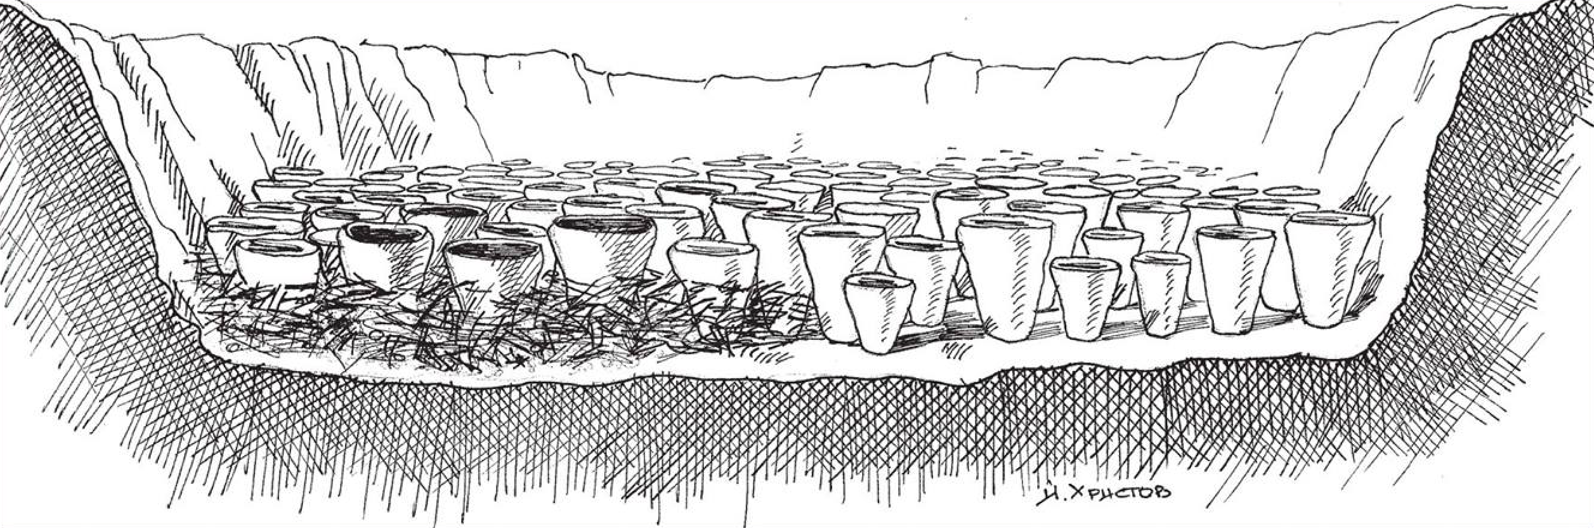 salt production vessels drawing